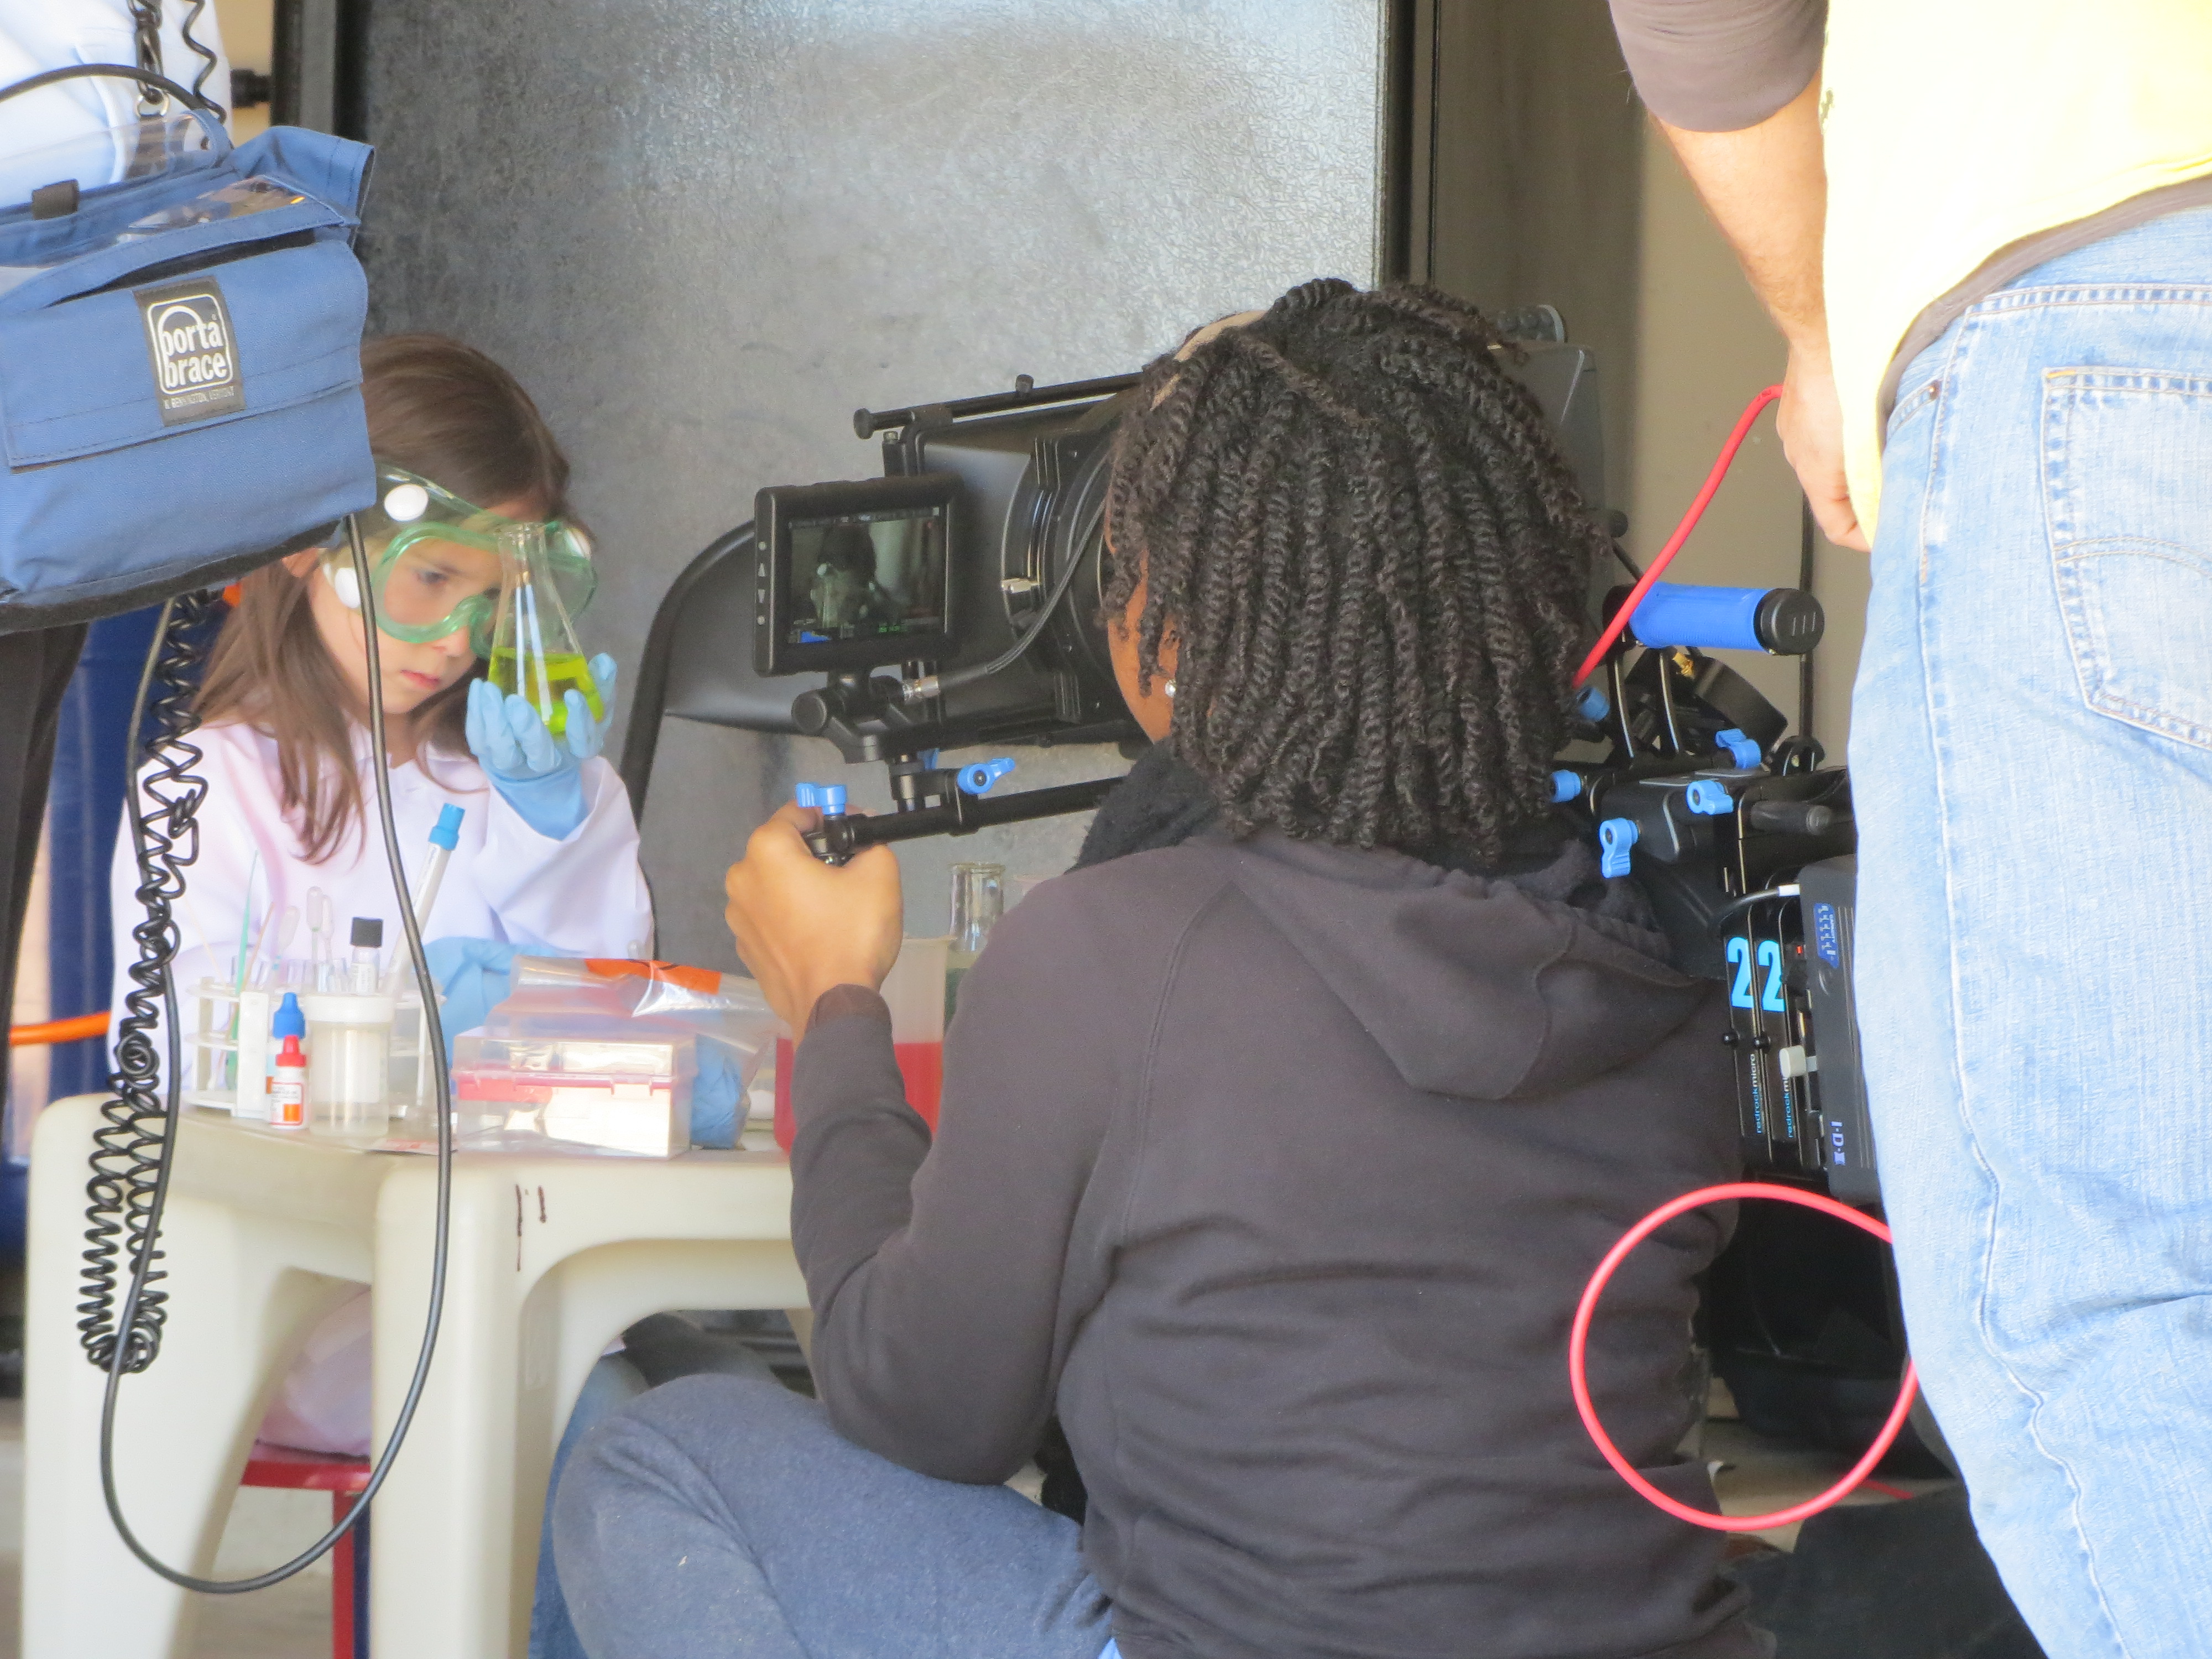 Kelsey Walton filming Mind Over Matter short film. - February 2013